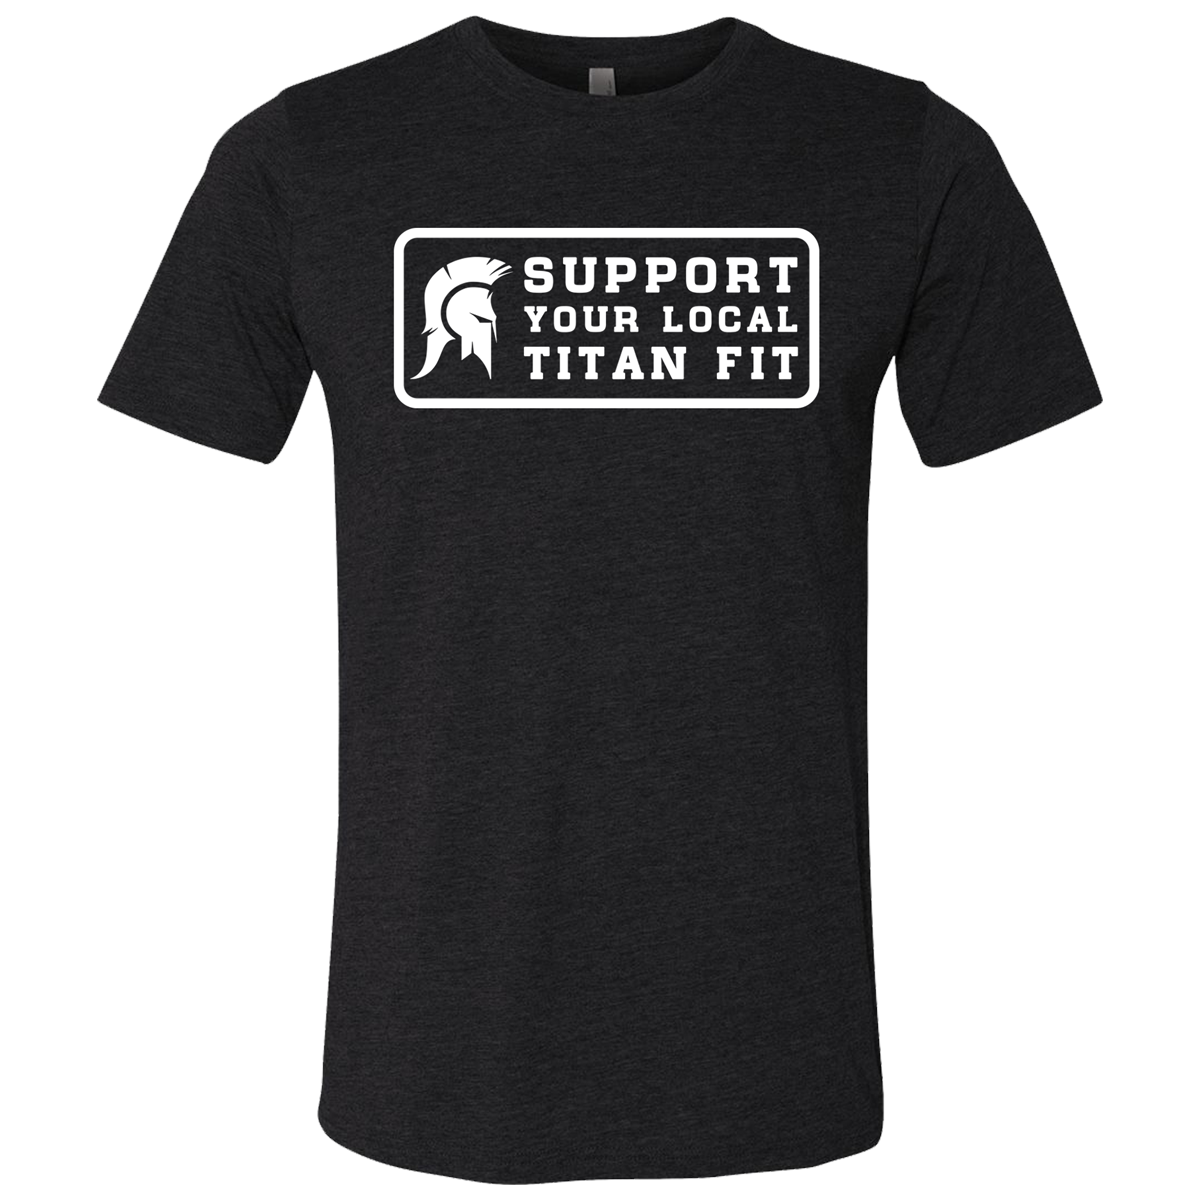 Titan Fit - Roanoke - T-Shirt - Support Badge - Black